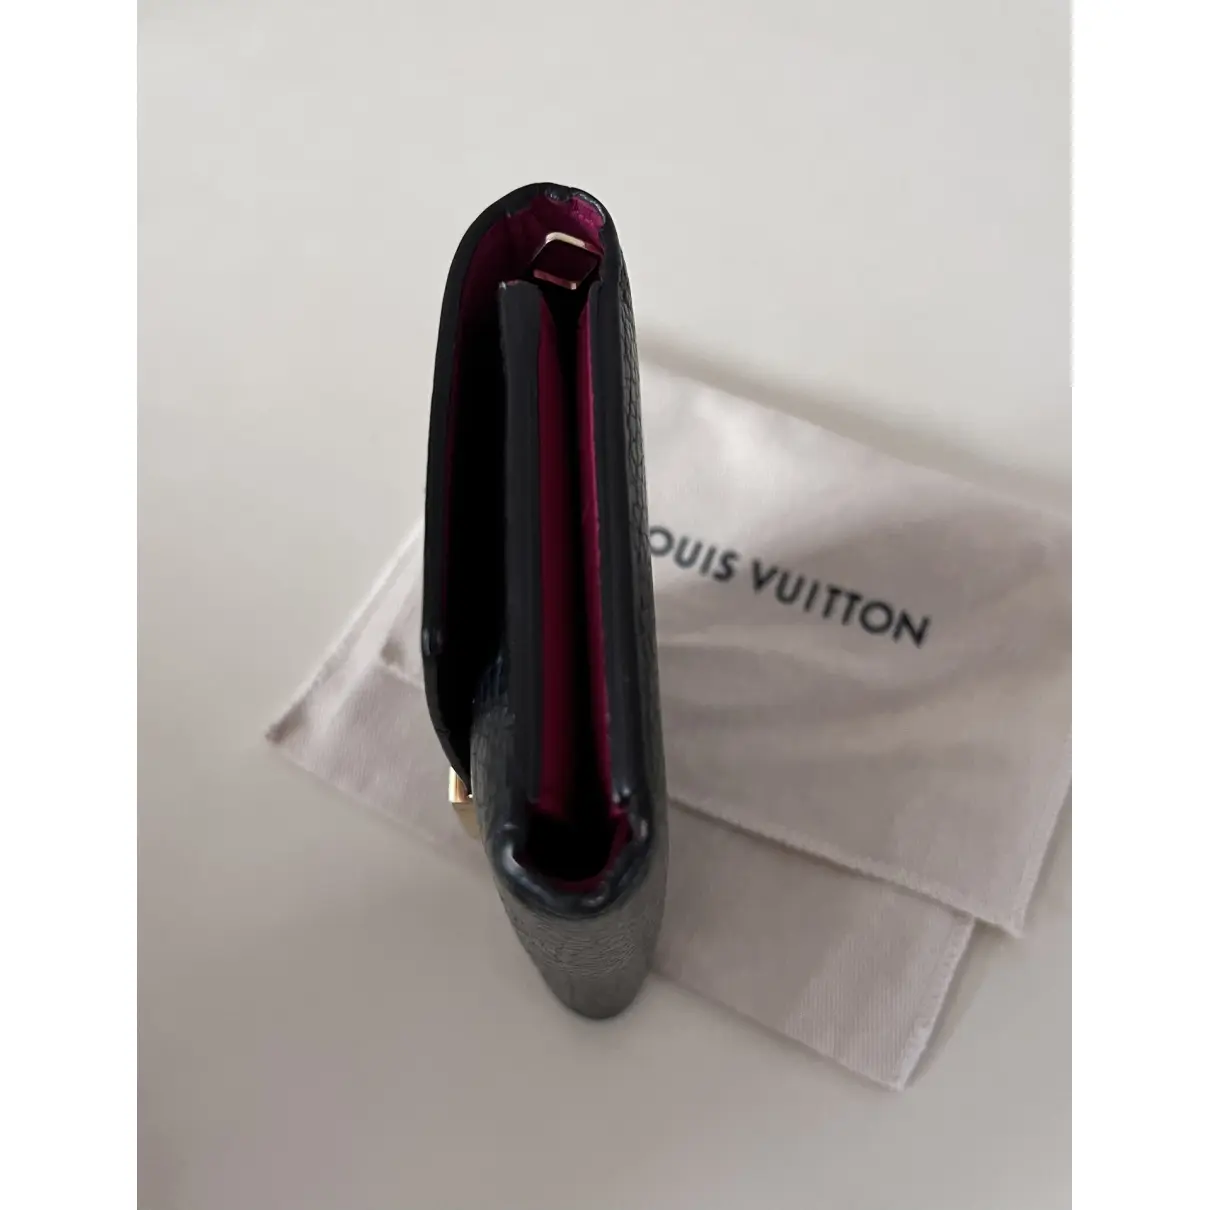 Buy Louis Vuitton Capucines leather wallet online